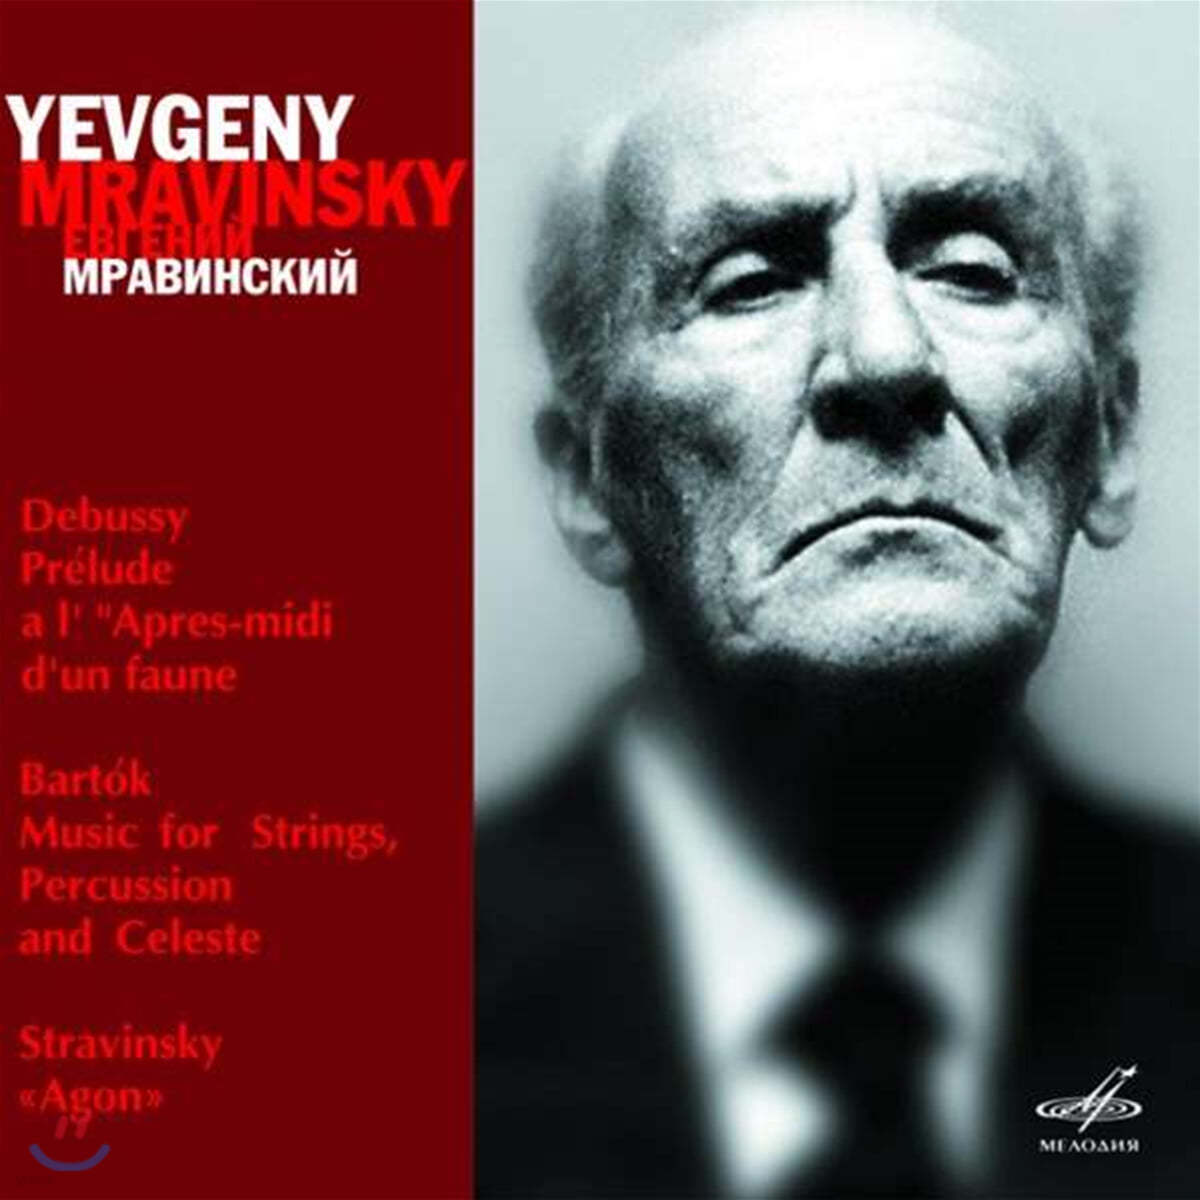 Yevgeny Mravinsky 바르톡: 현을 위한 음악, 퍼커션과 셀레스타 / 드뷔시: 프렐류드 / 스트라빈스키: 아곤 (Bartok : Music For Strings, Percussion And Celesta) 